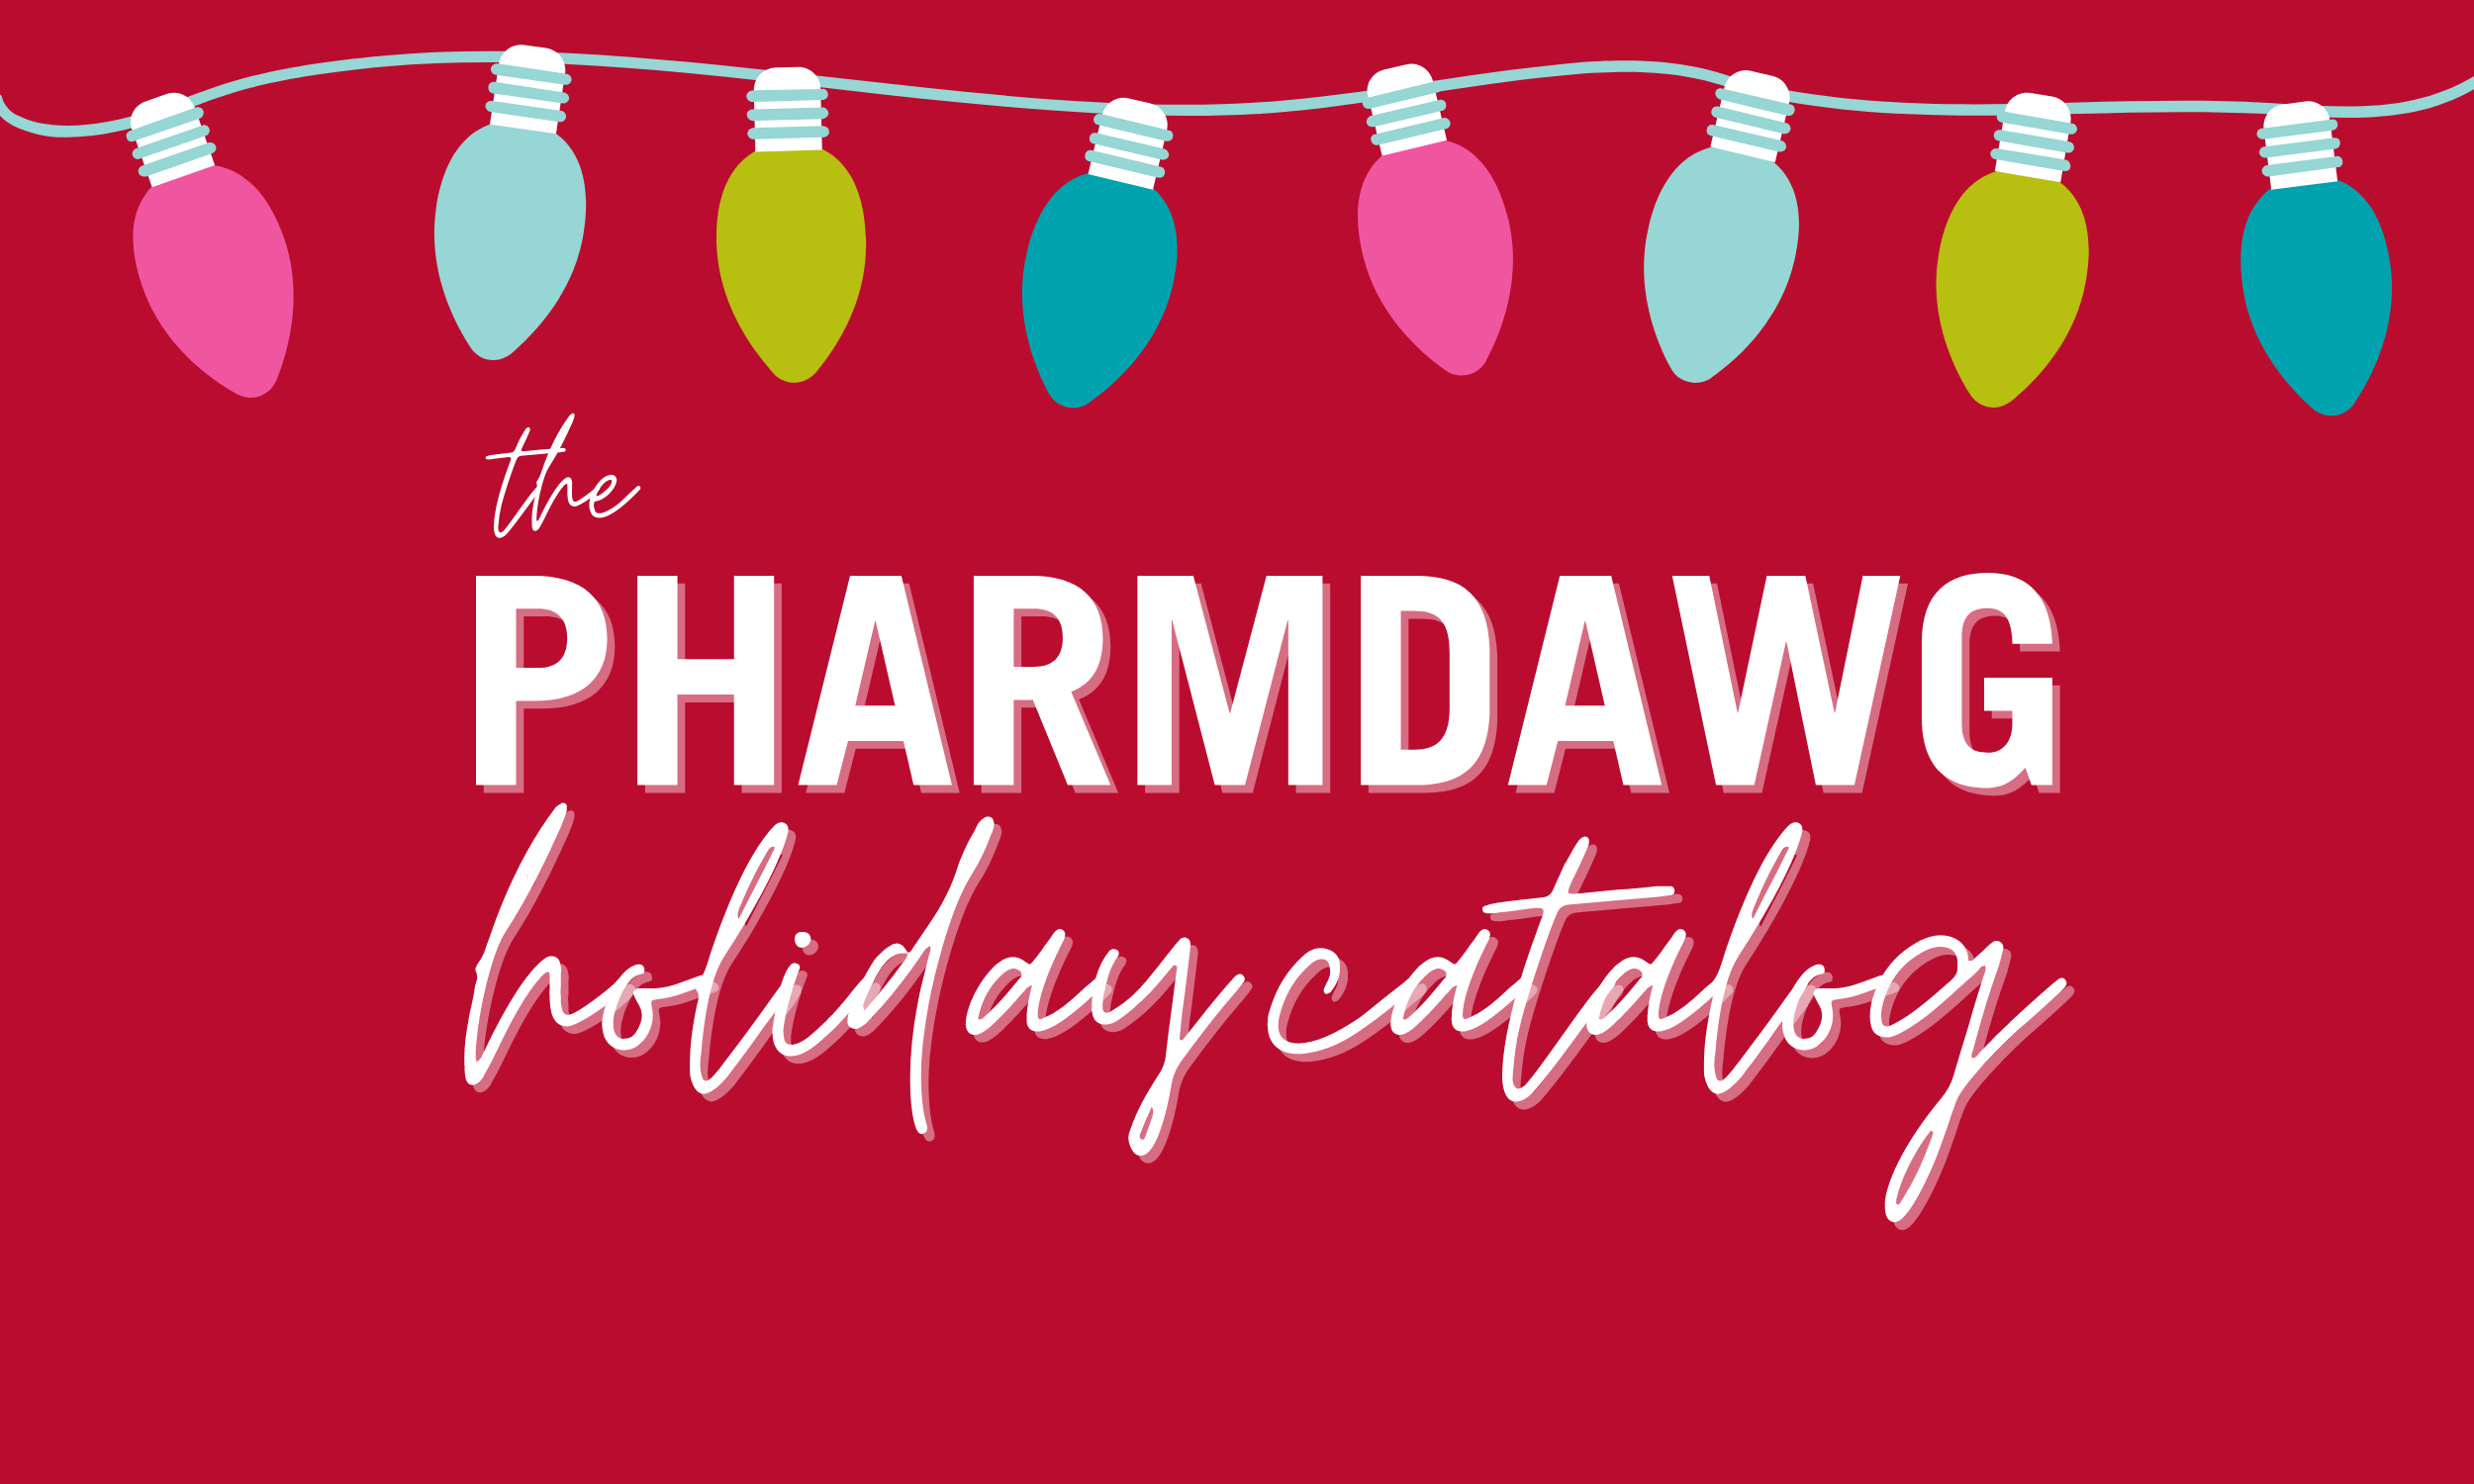 The PharmDawg Holiday Catalog